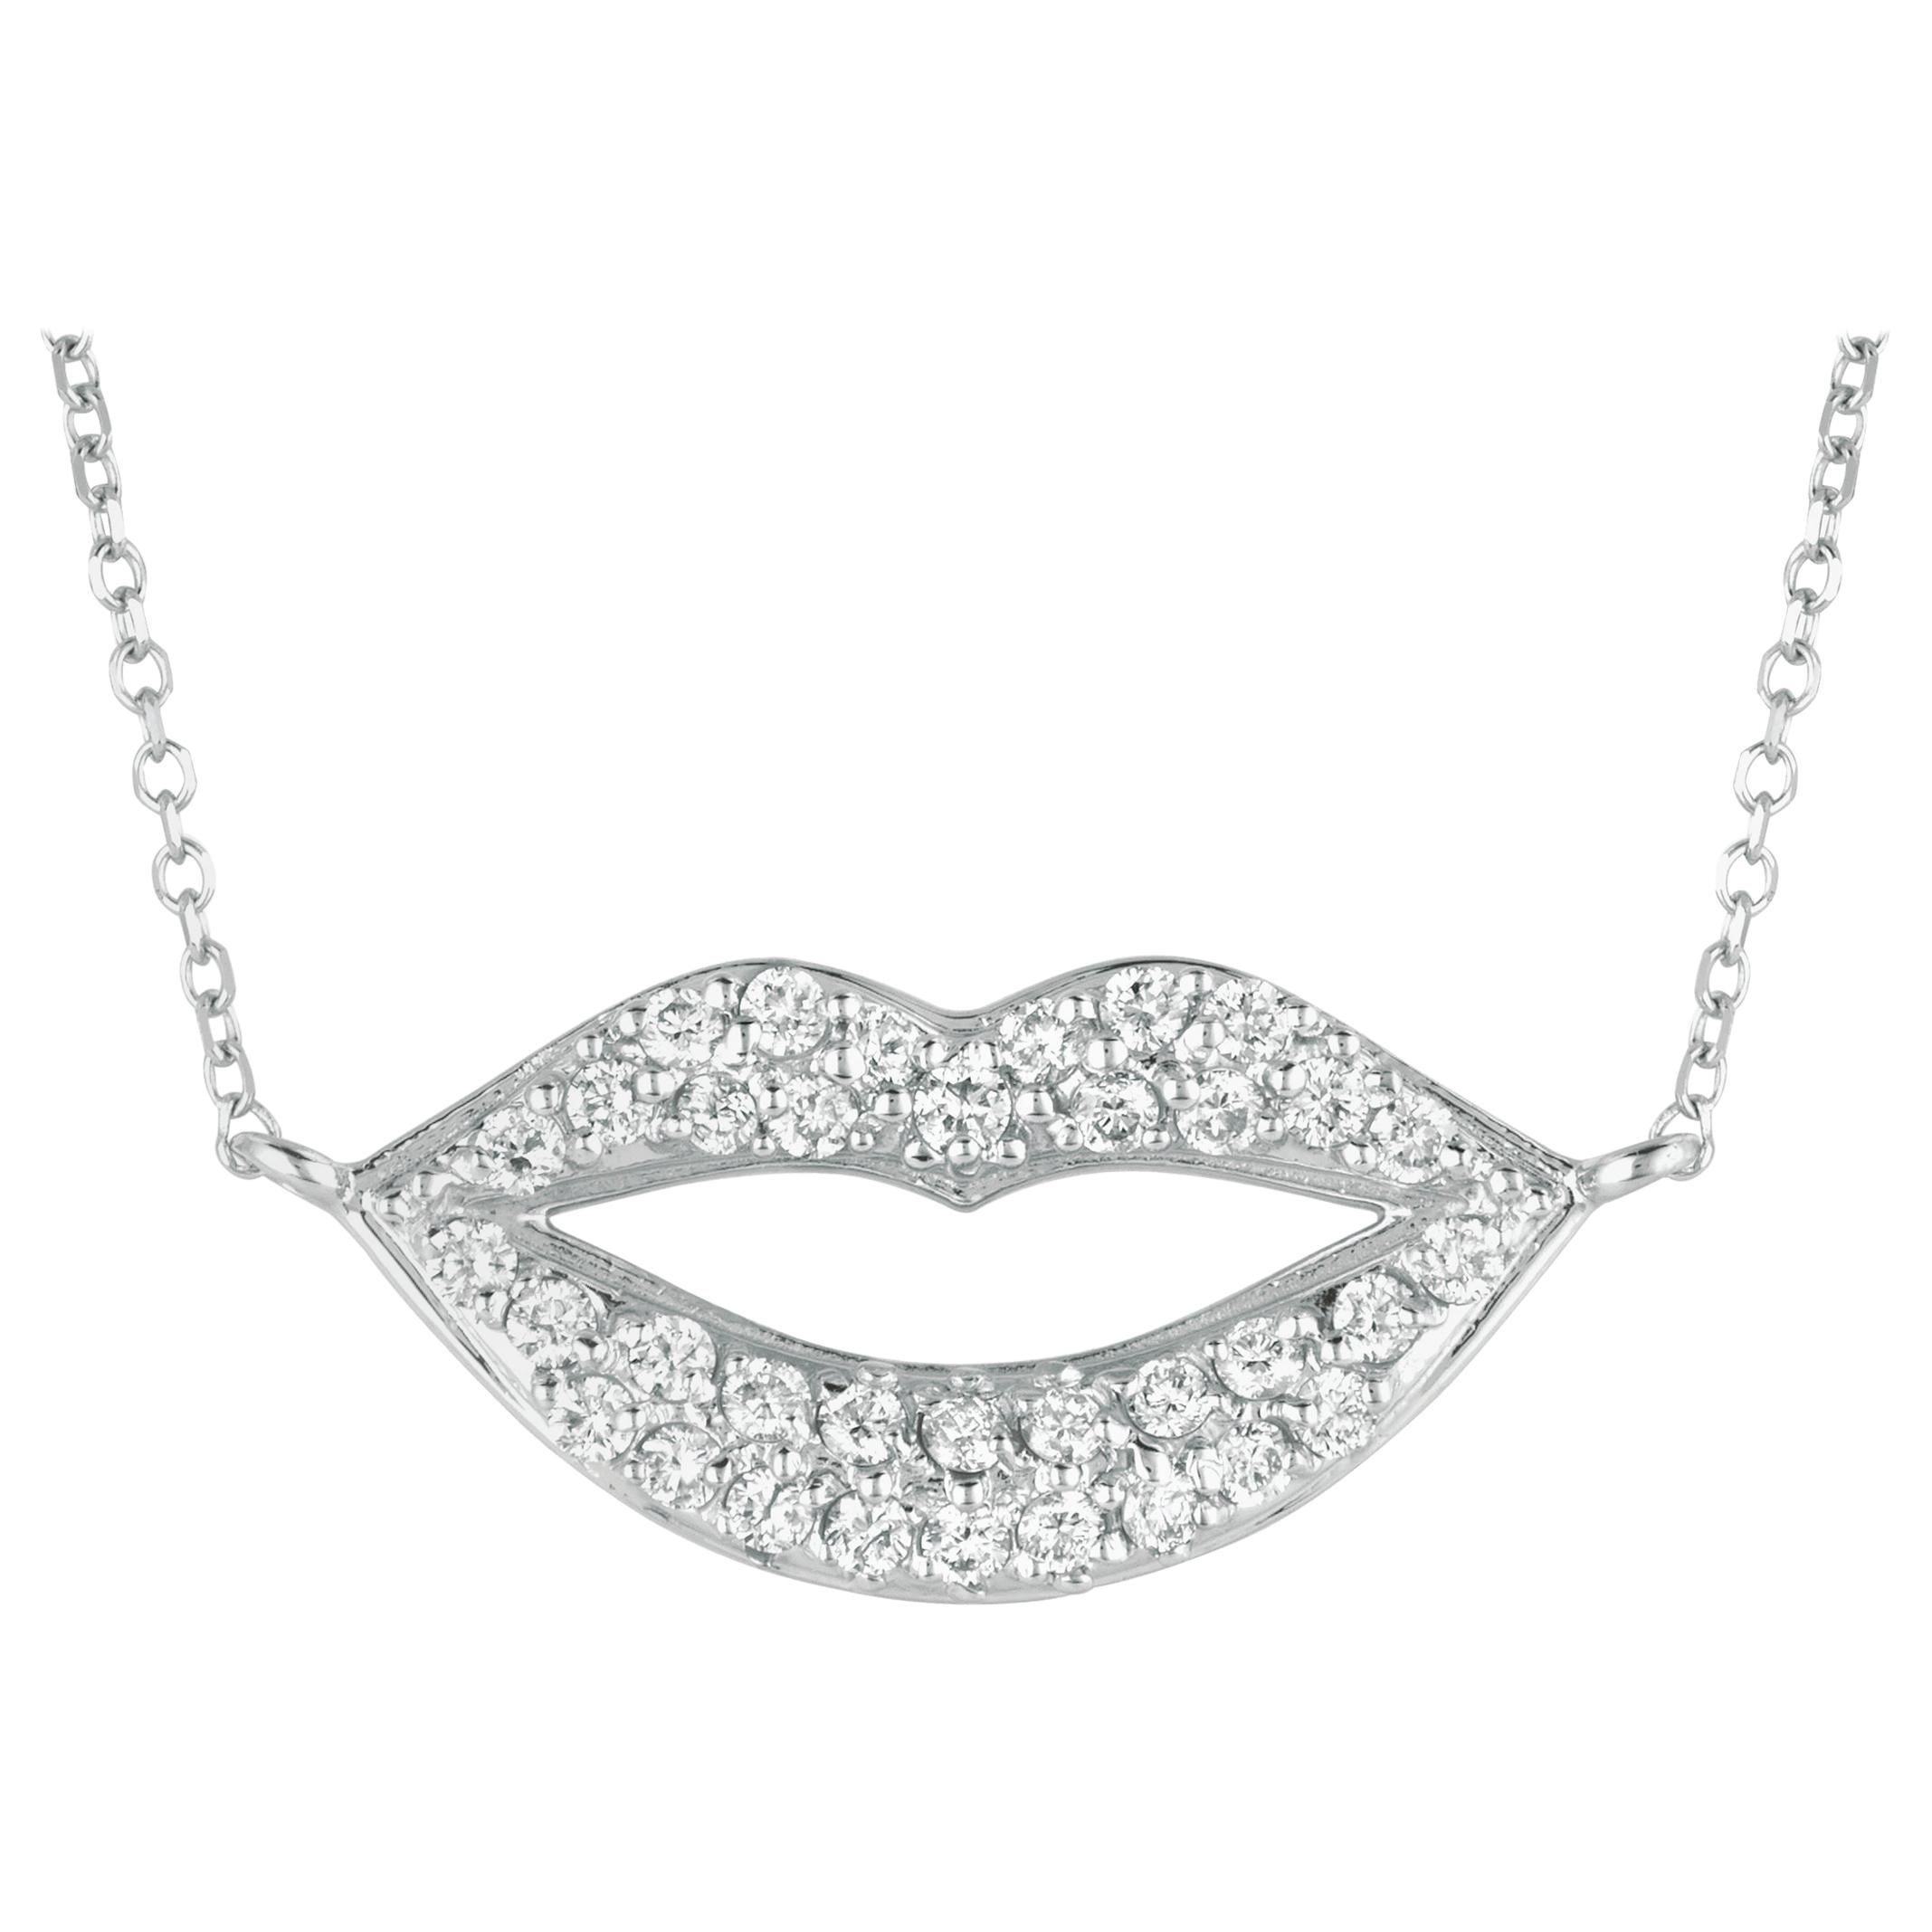 0.35 Carat Natural Diamond Lips Necklace 14 Karat White Gold G SI Chain